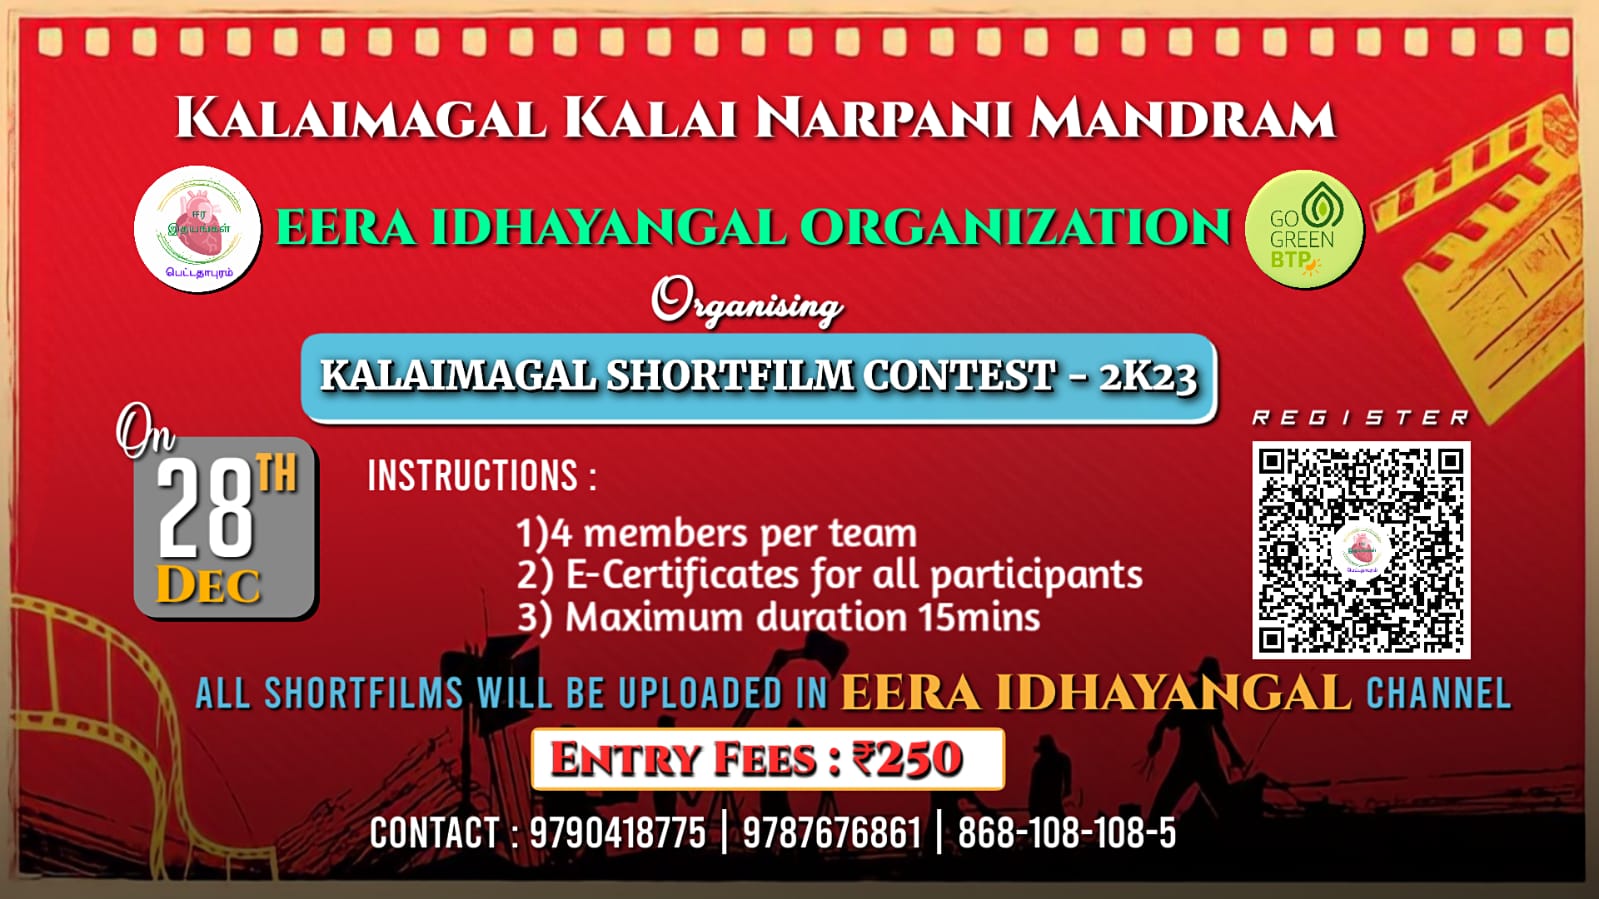 KALAIMAGAL'S SHORT FLIM CONTEST-2K23, Eera Idhayangal Organization ...